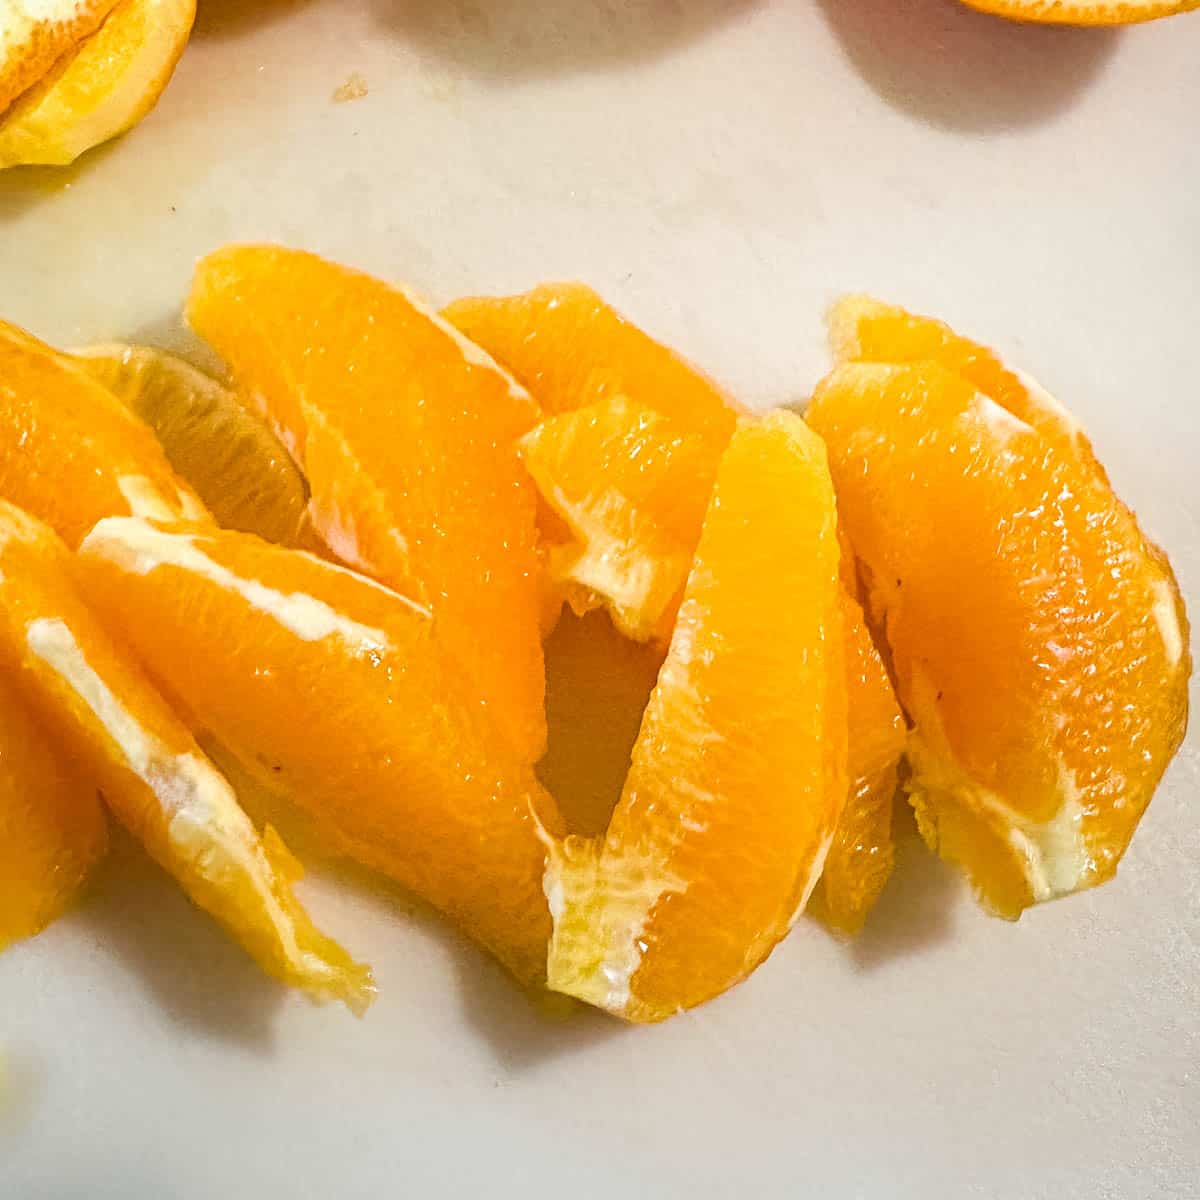 Orange segments on a white cutting board.